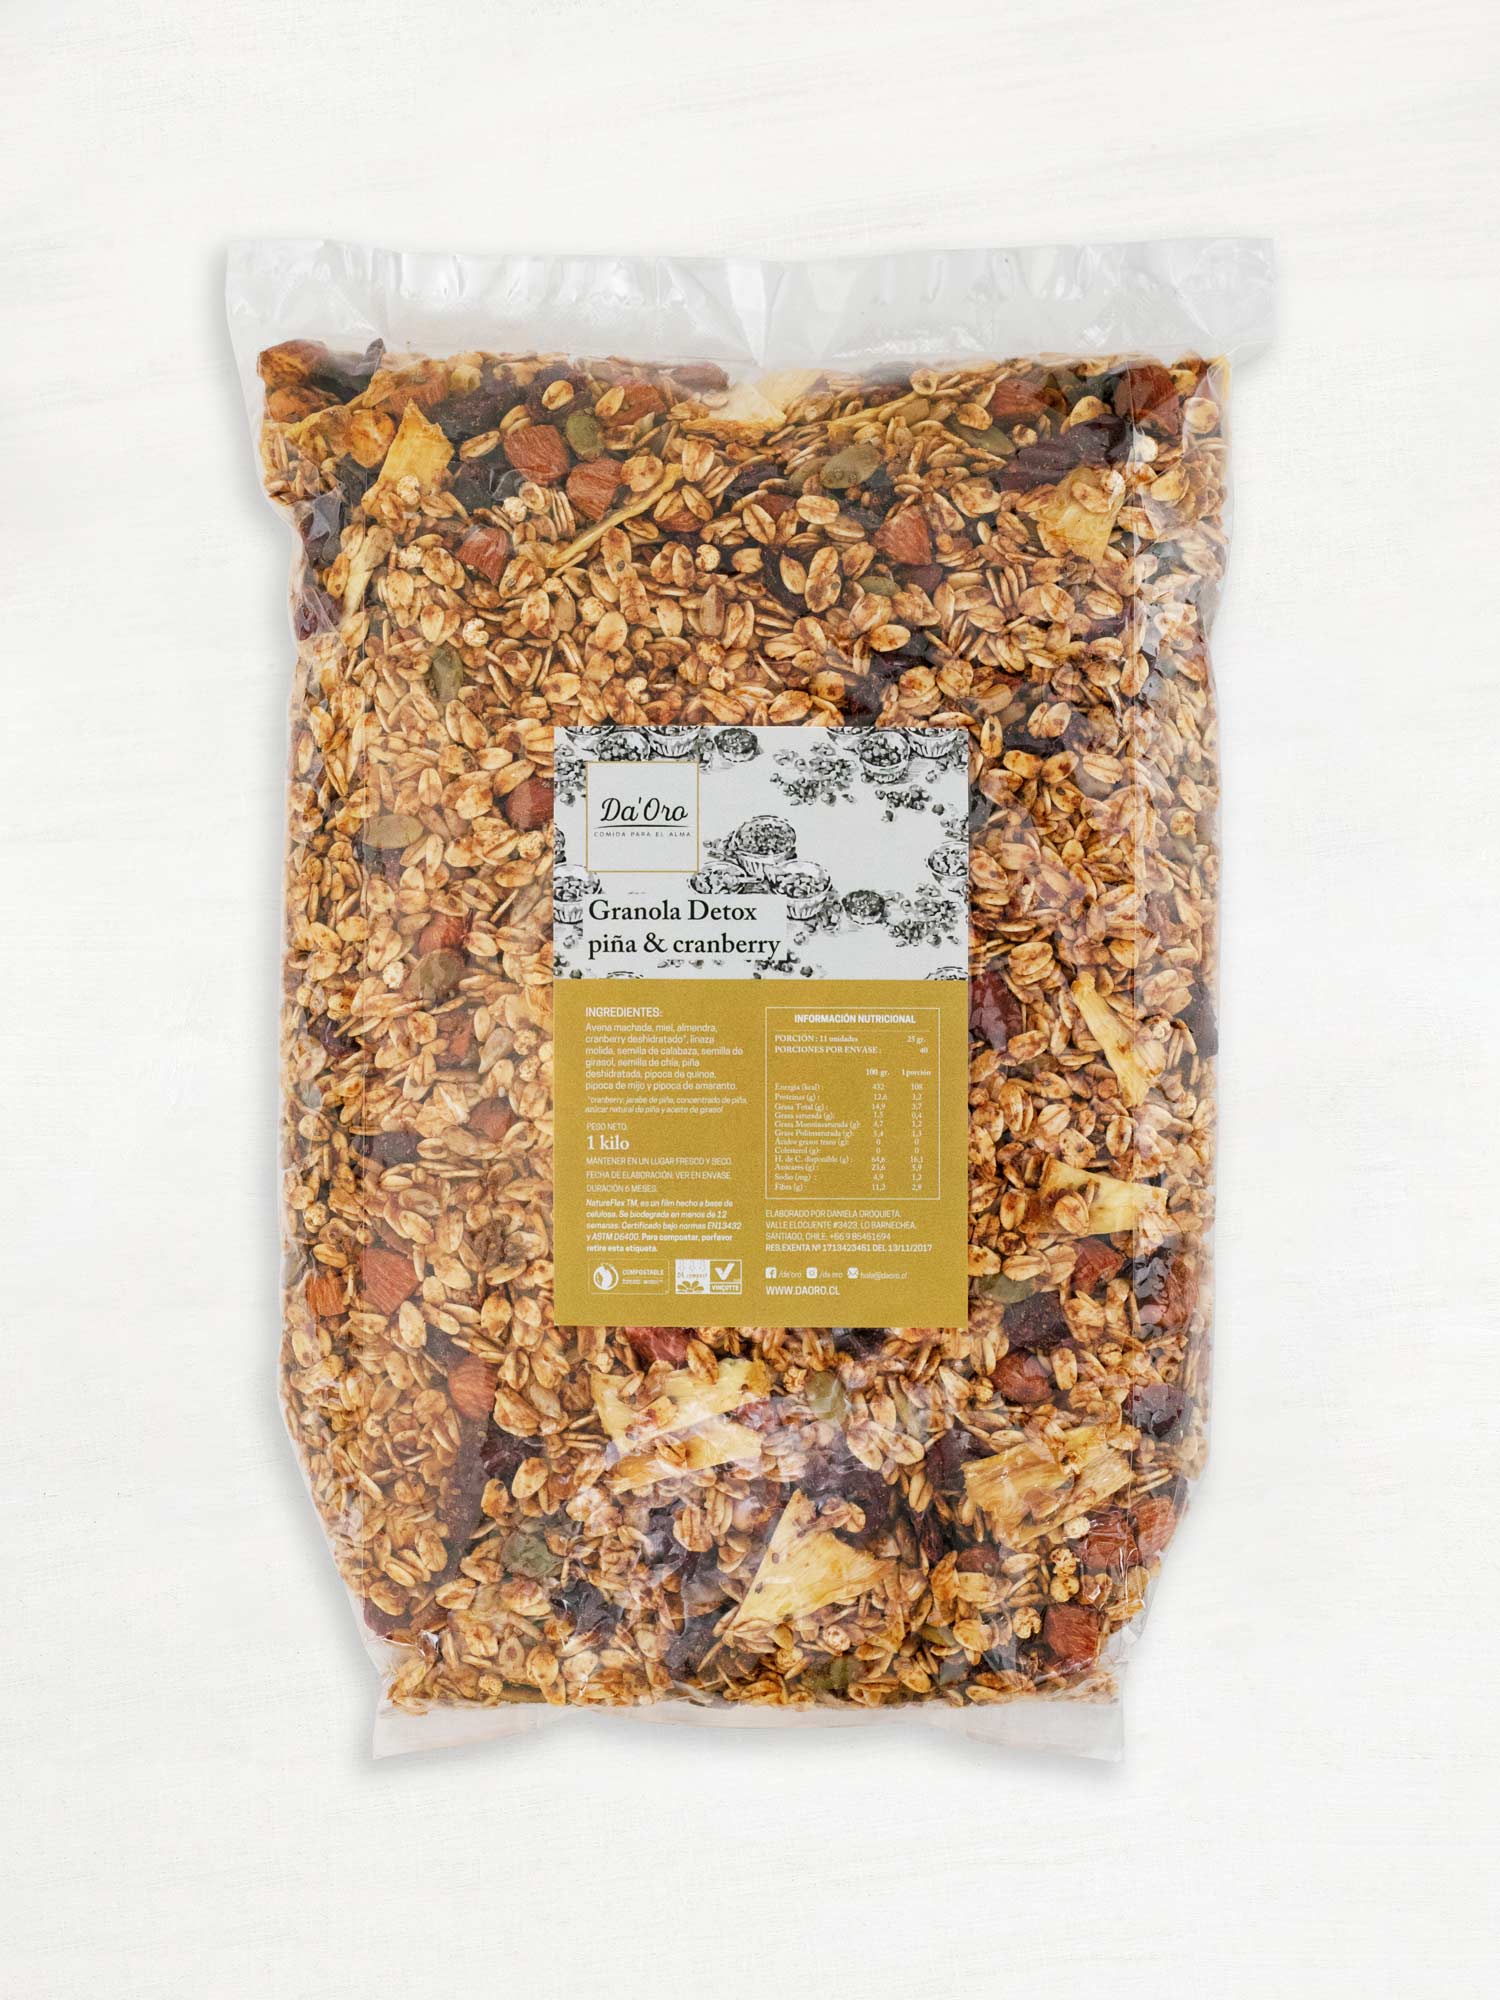 Bolsa de granola detox piña cranberry 1 kilo Da’Oro